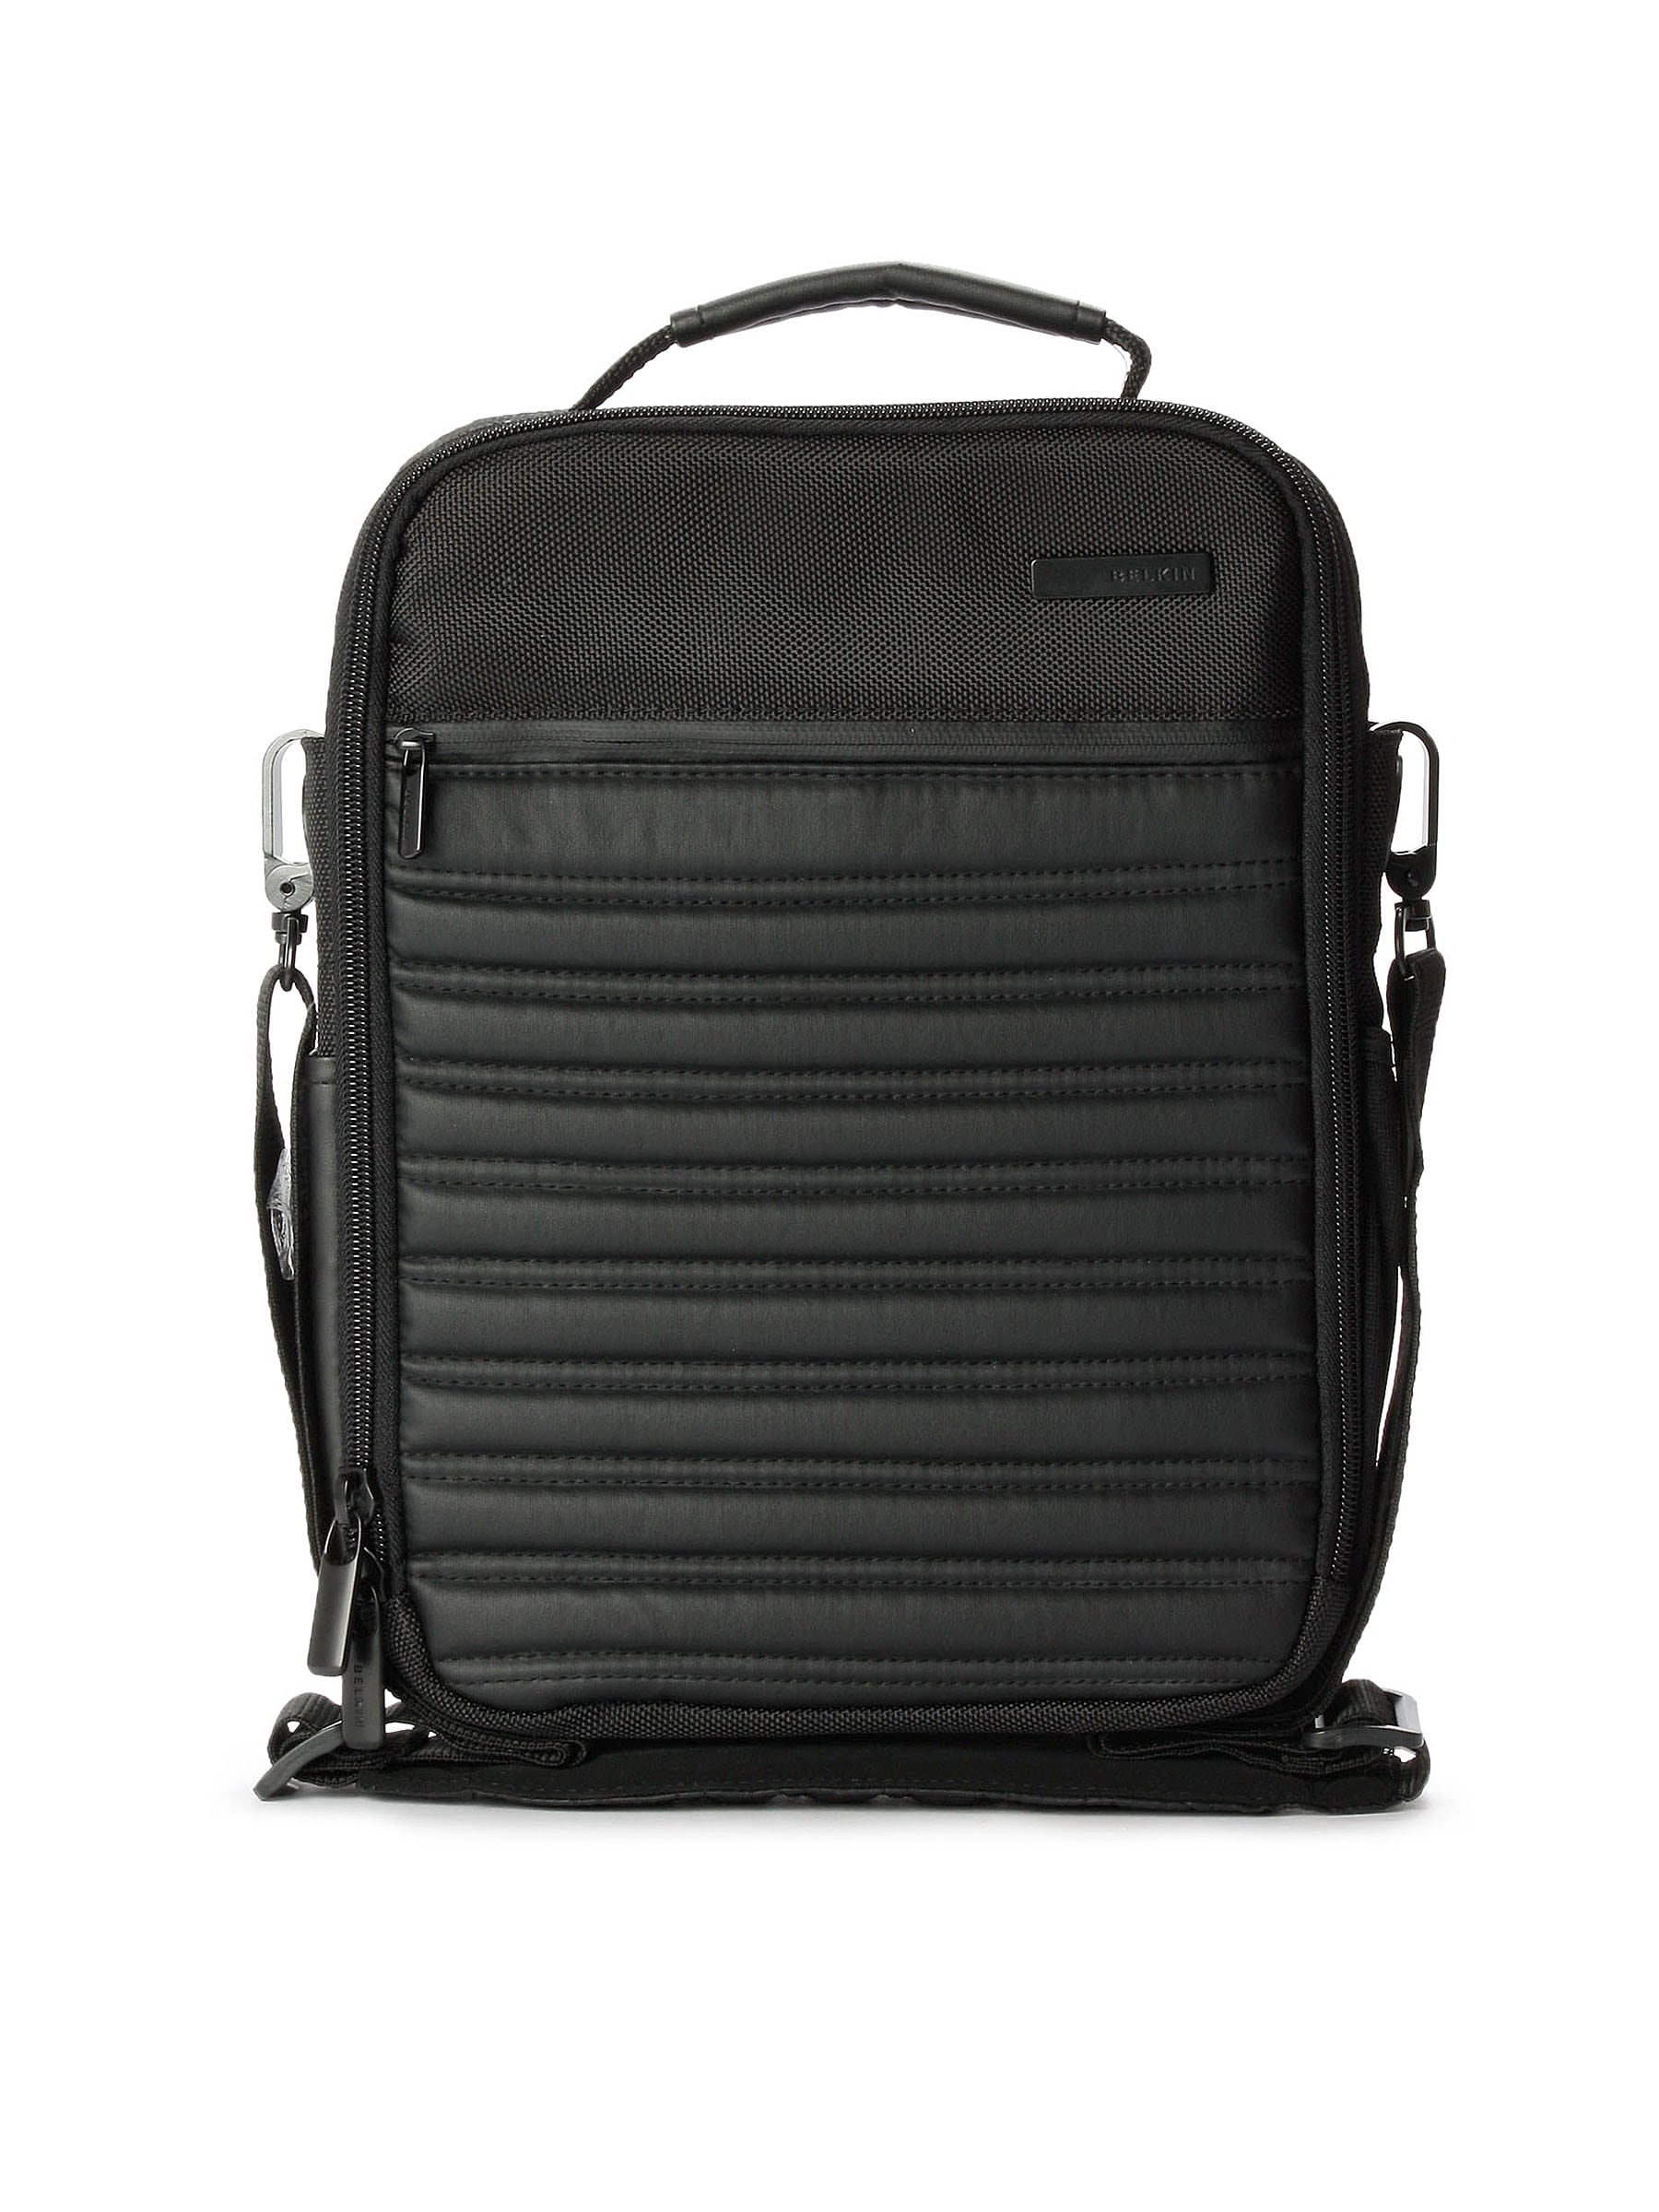 Belkin Unisex Pace Tall Messenger Black Netbook Bag